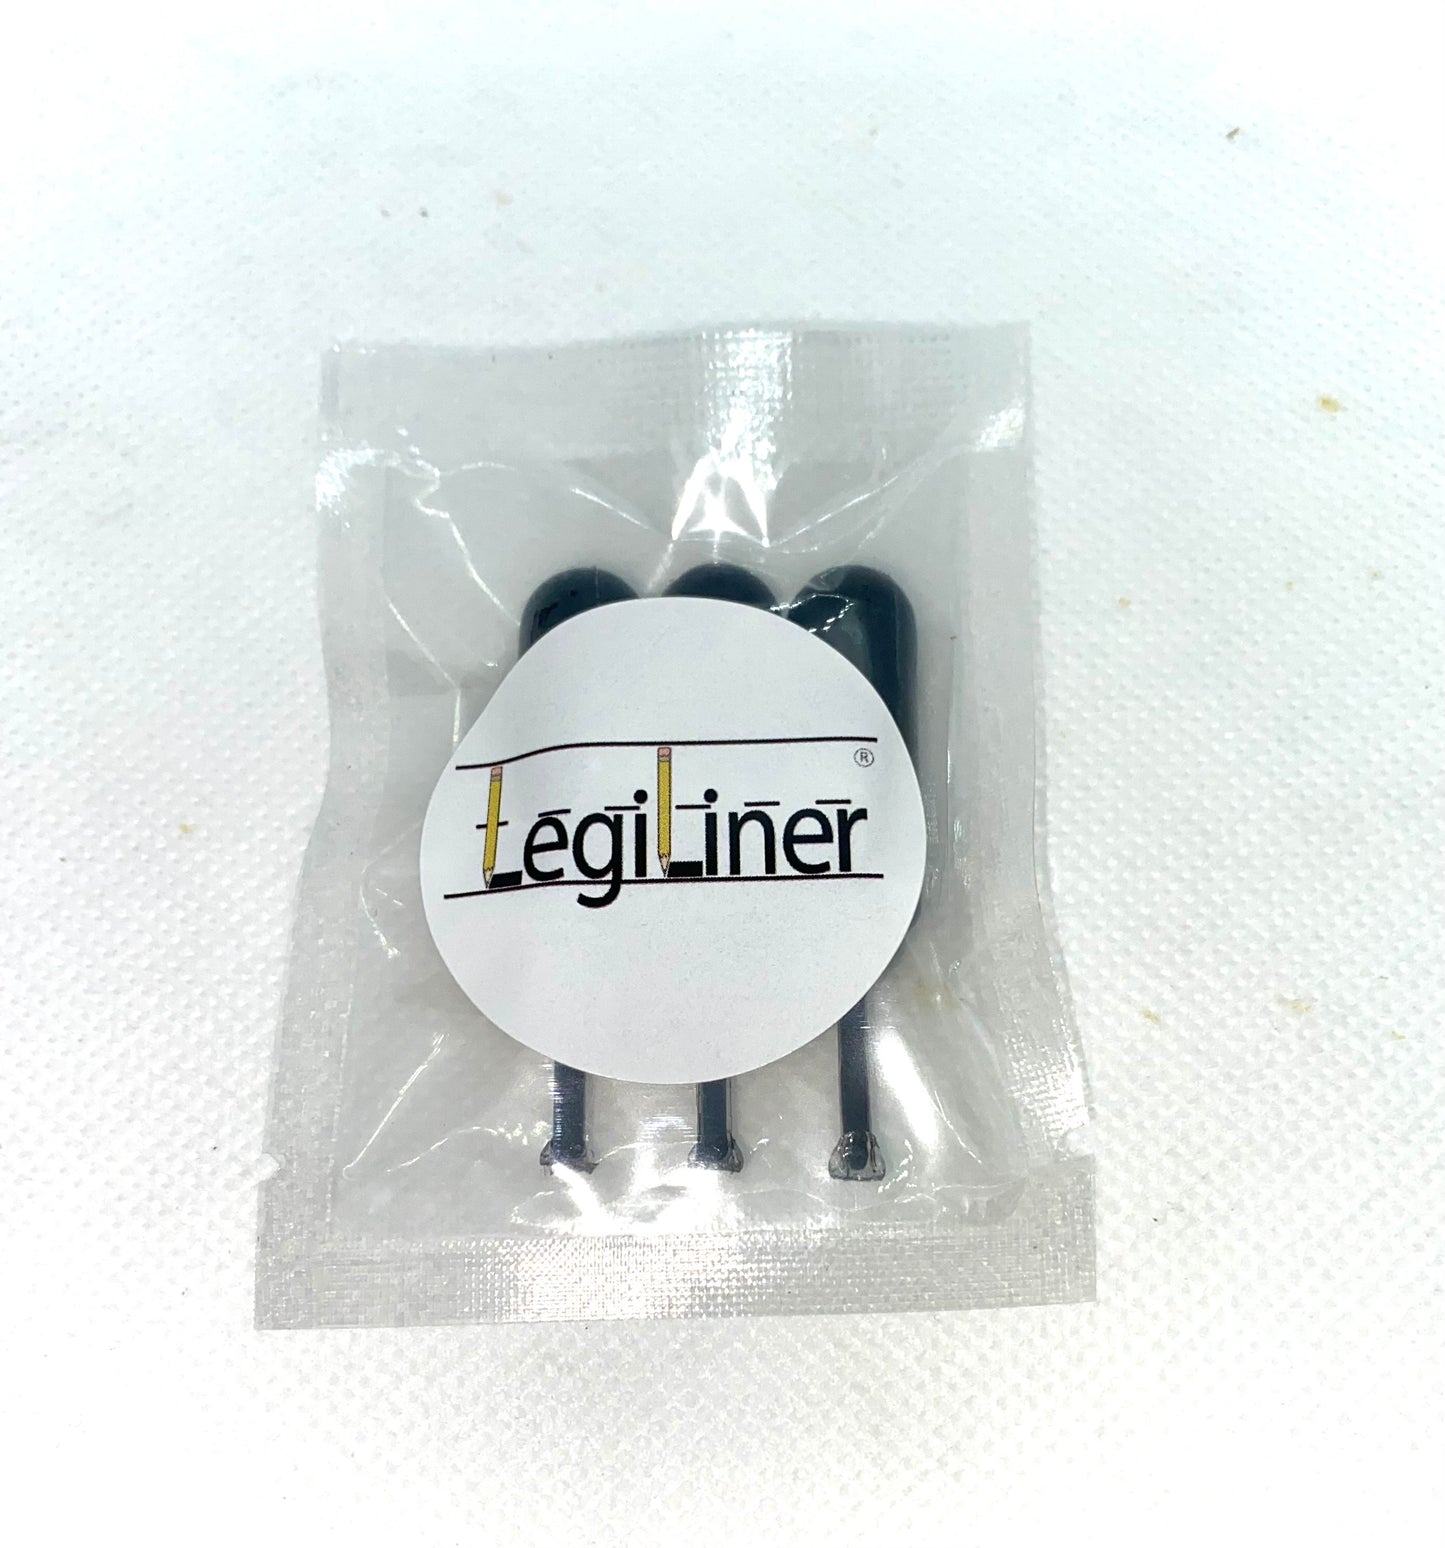 LegiLiner Self-Inking Teacher Stamp-3/4 inch Dashed Handwriting Lines  Roller Stamp